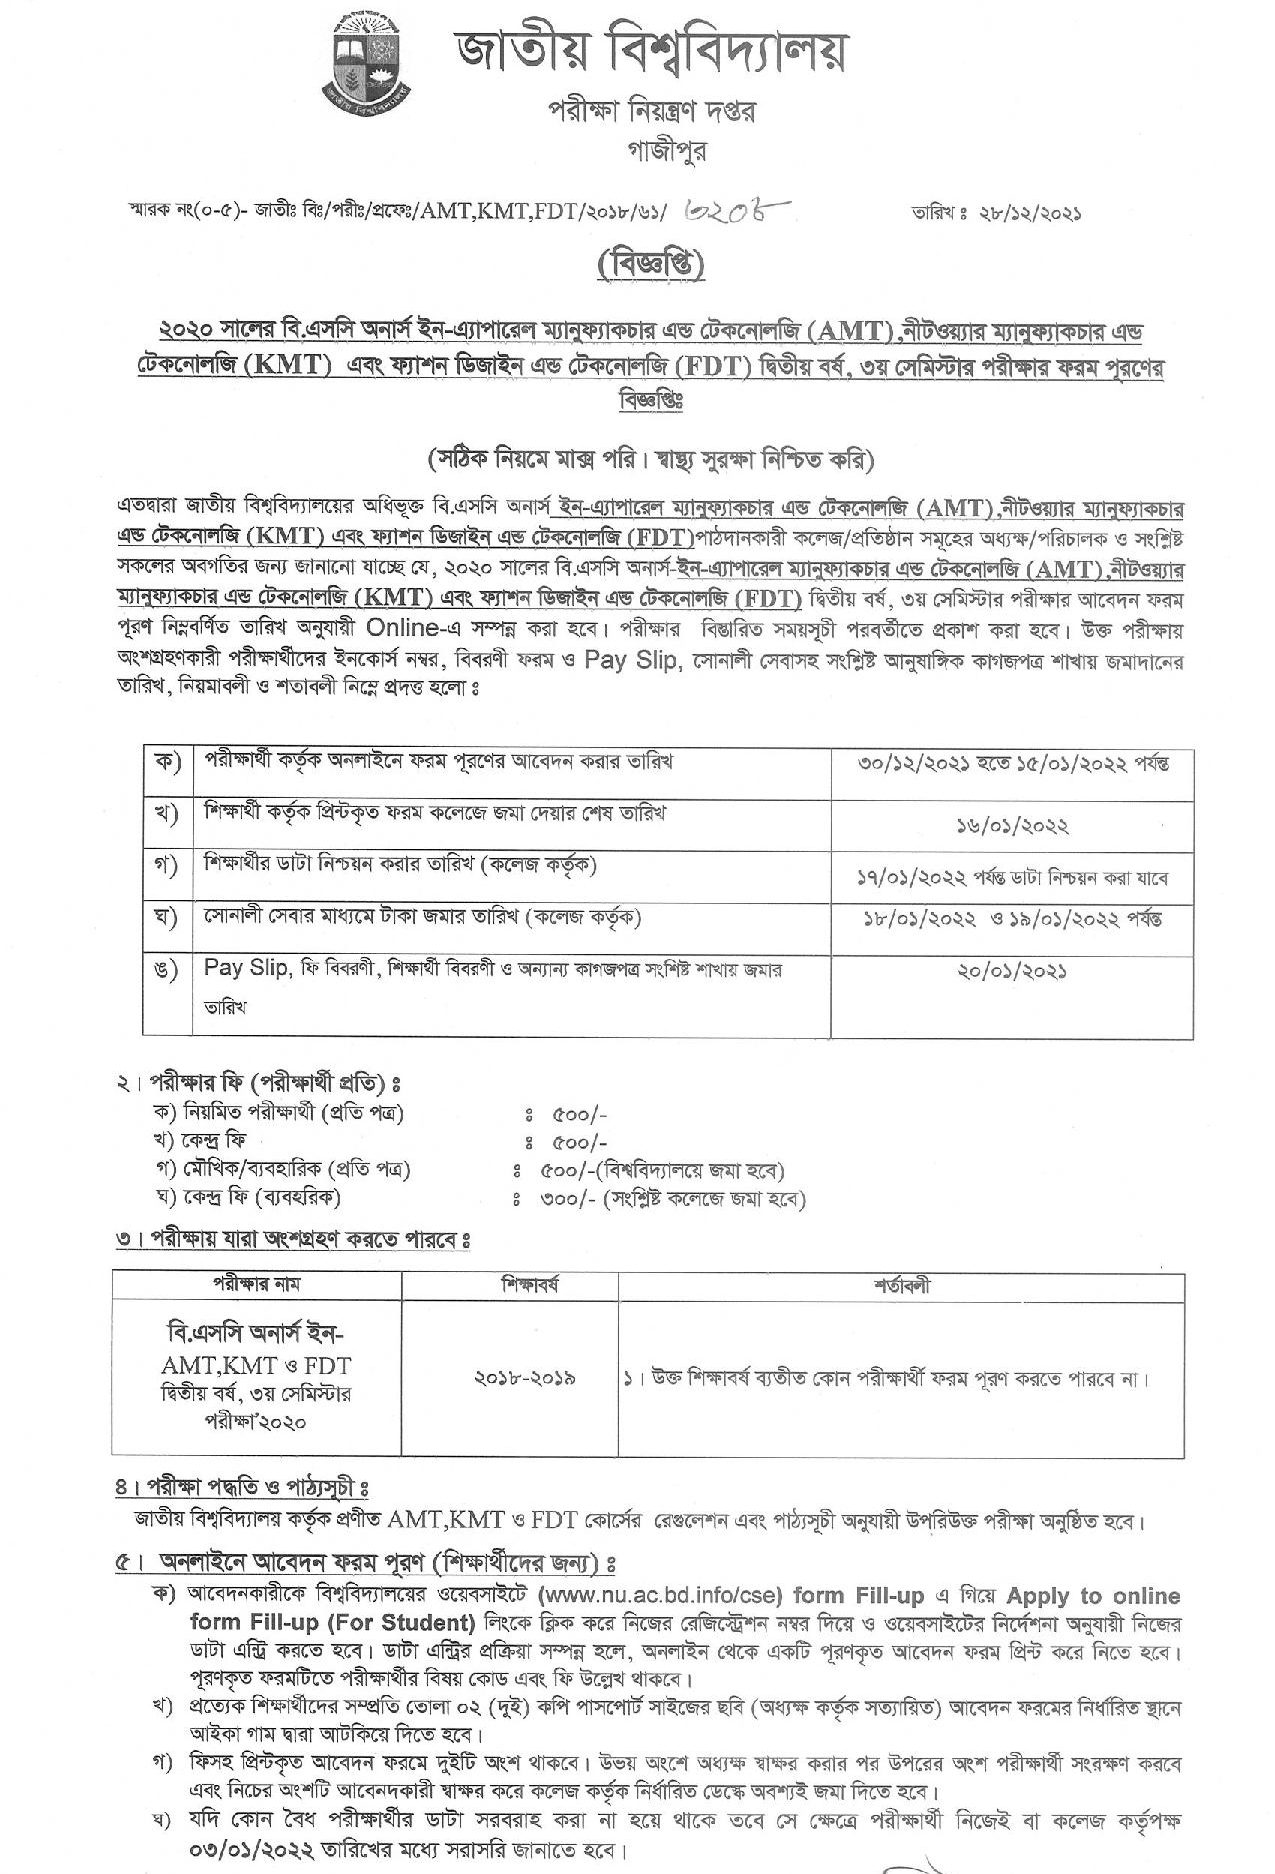 NU BSC In ATM, KMT, FDT Exam Form Fill-Up Notice 2021